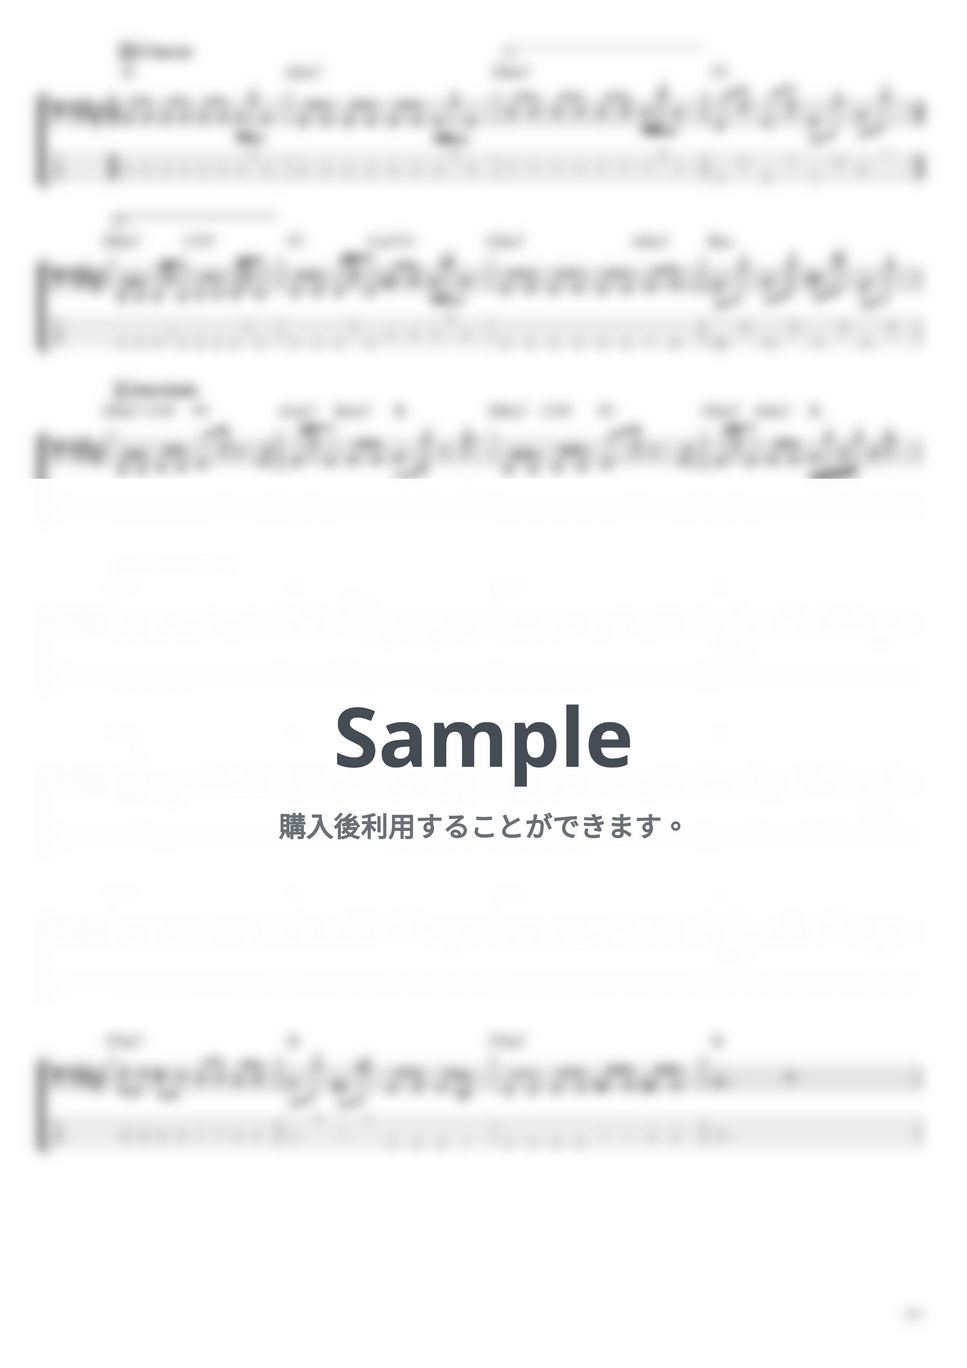 東京事変 - 毒味 (ベース Tab譜 4弦) by T's bass score